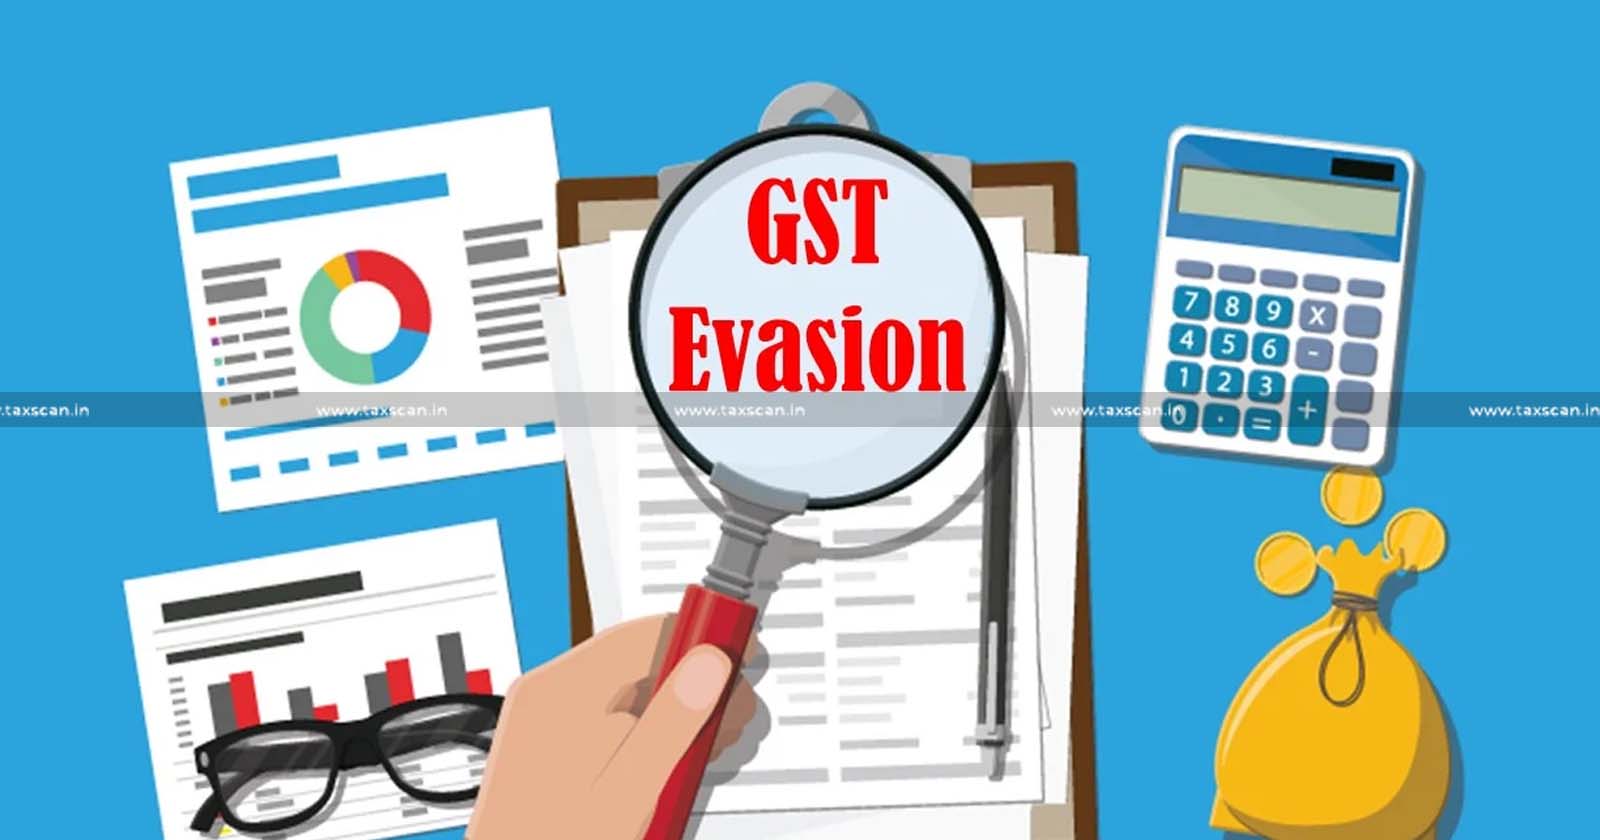 Supreme Court's Gameskraf - Show-Cause Notices - Online Gaming Companies Over GST Evasion Allegations - taxscan